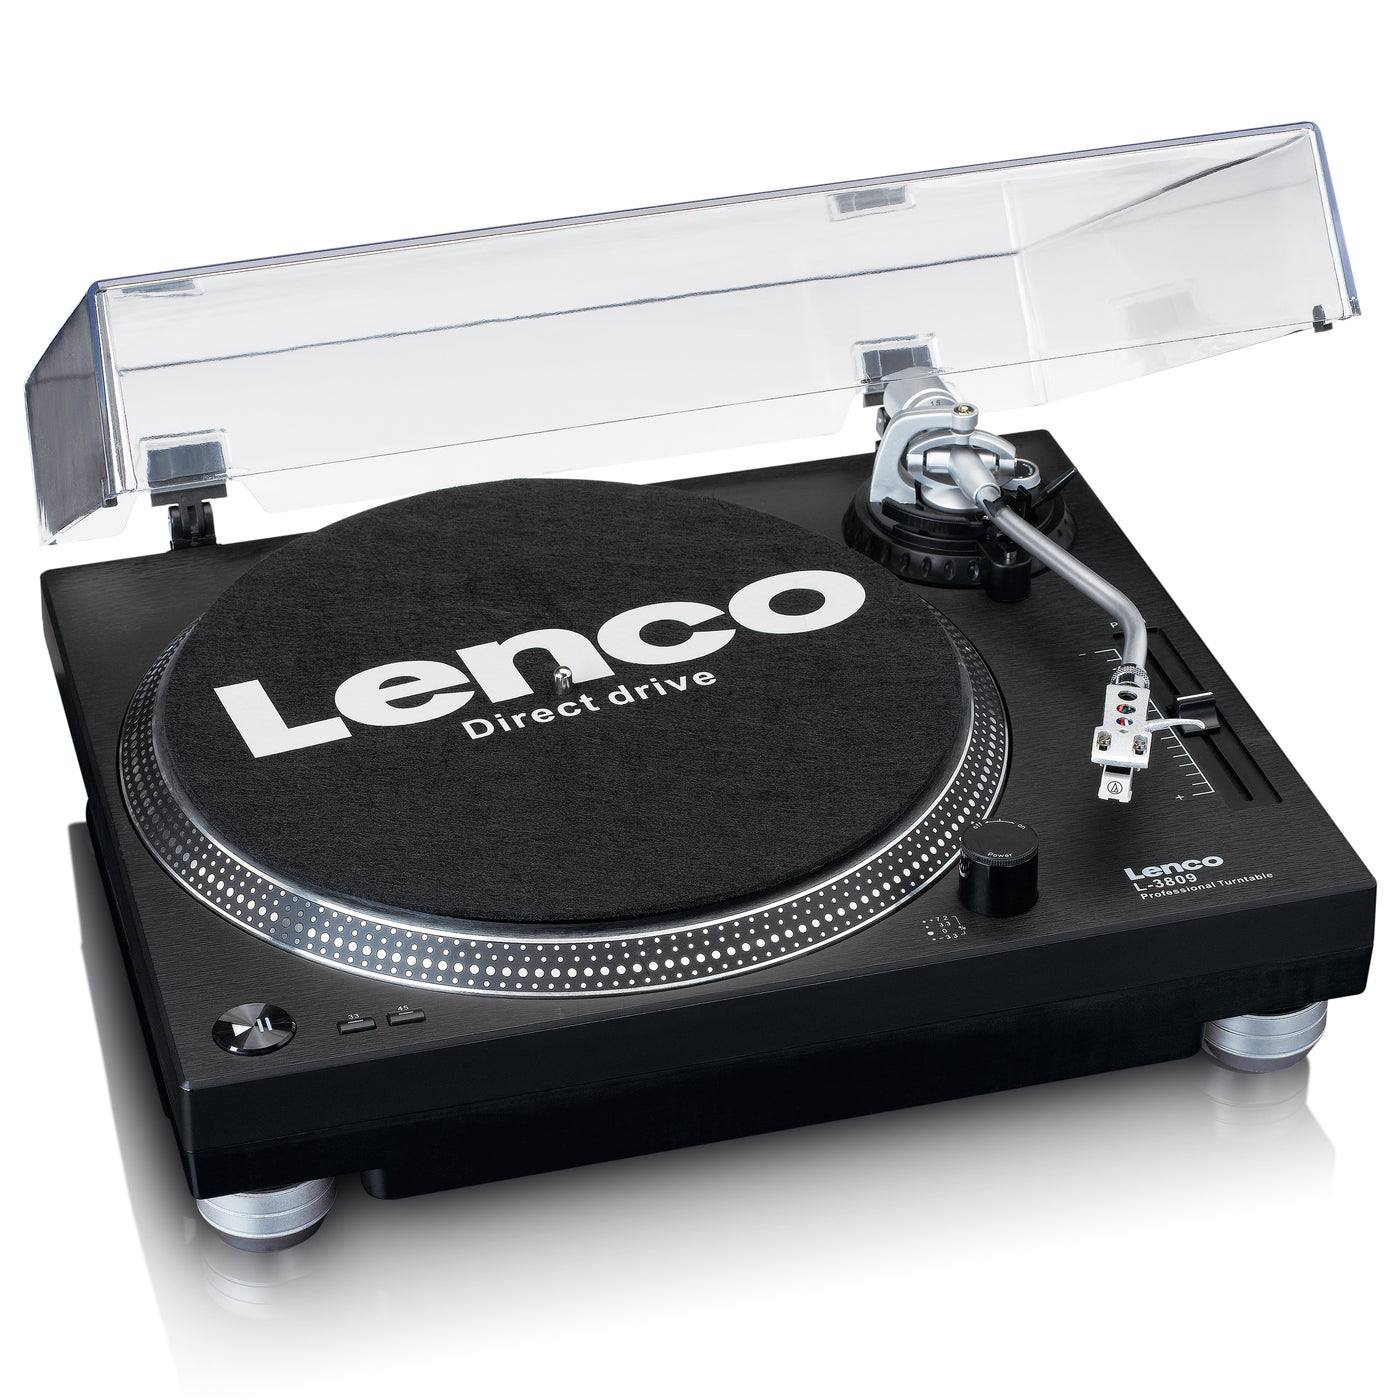 Lenco L-3809BK - Plattenspieler mit Direktantrieb - Pitch Control - USB/PC-Encoding - schwarz